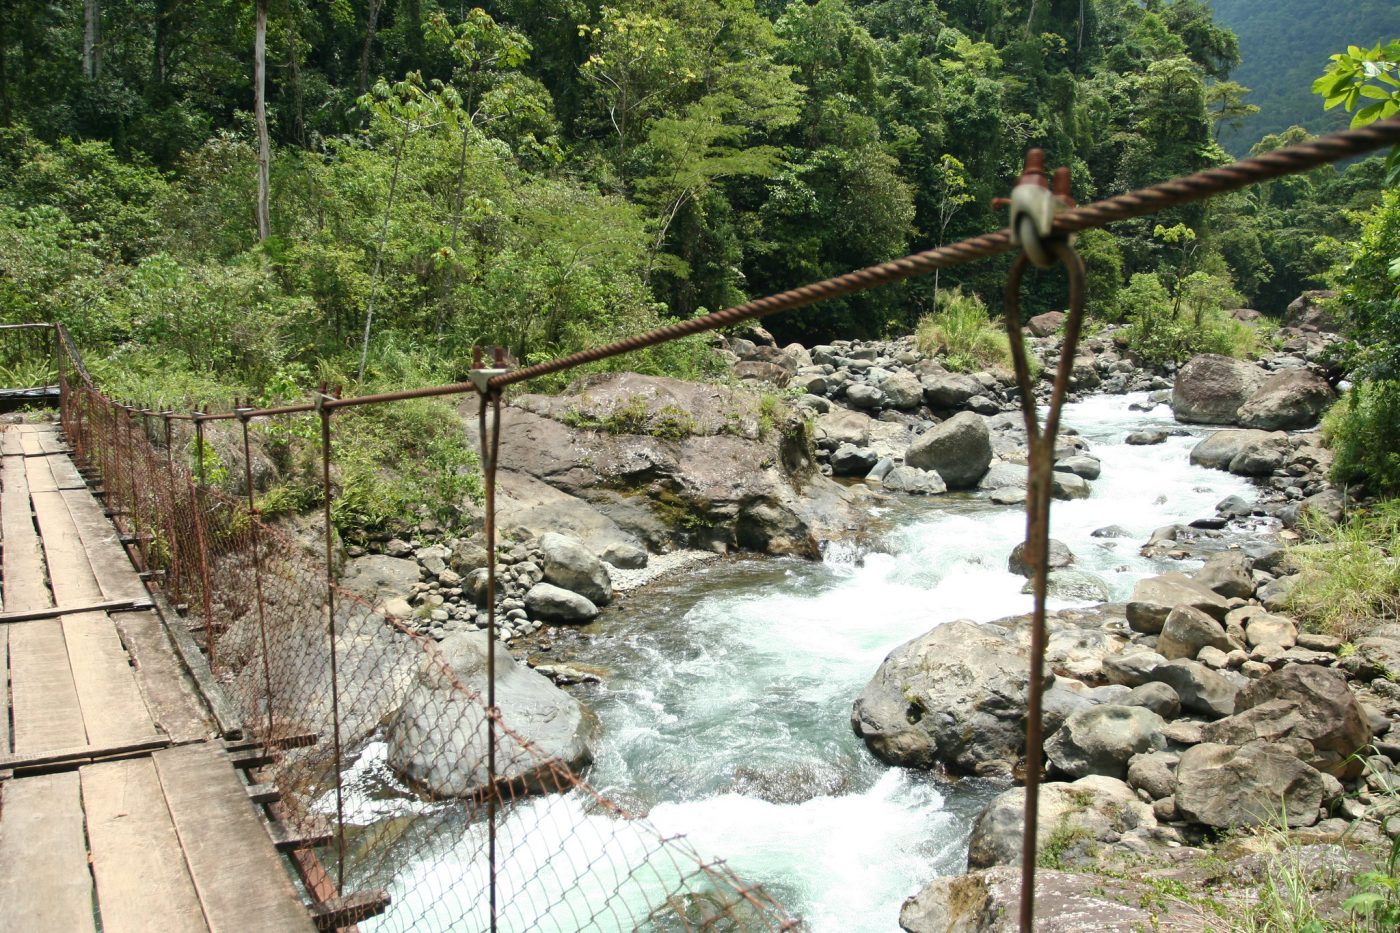 The Complete Guide to Costa Rica National Parks - Piedras Blancas National Park